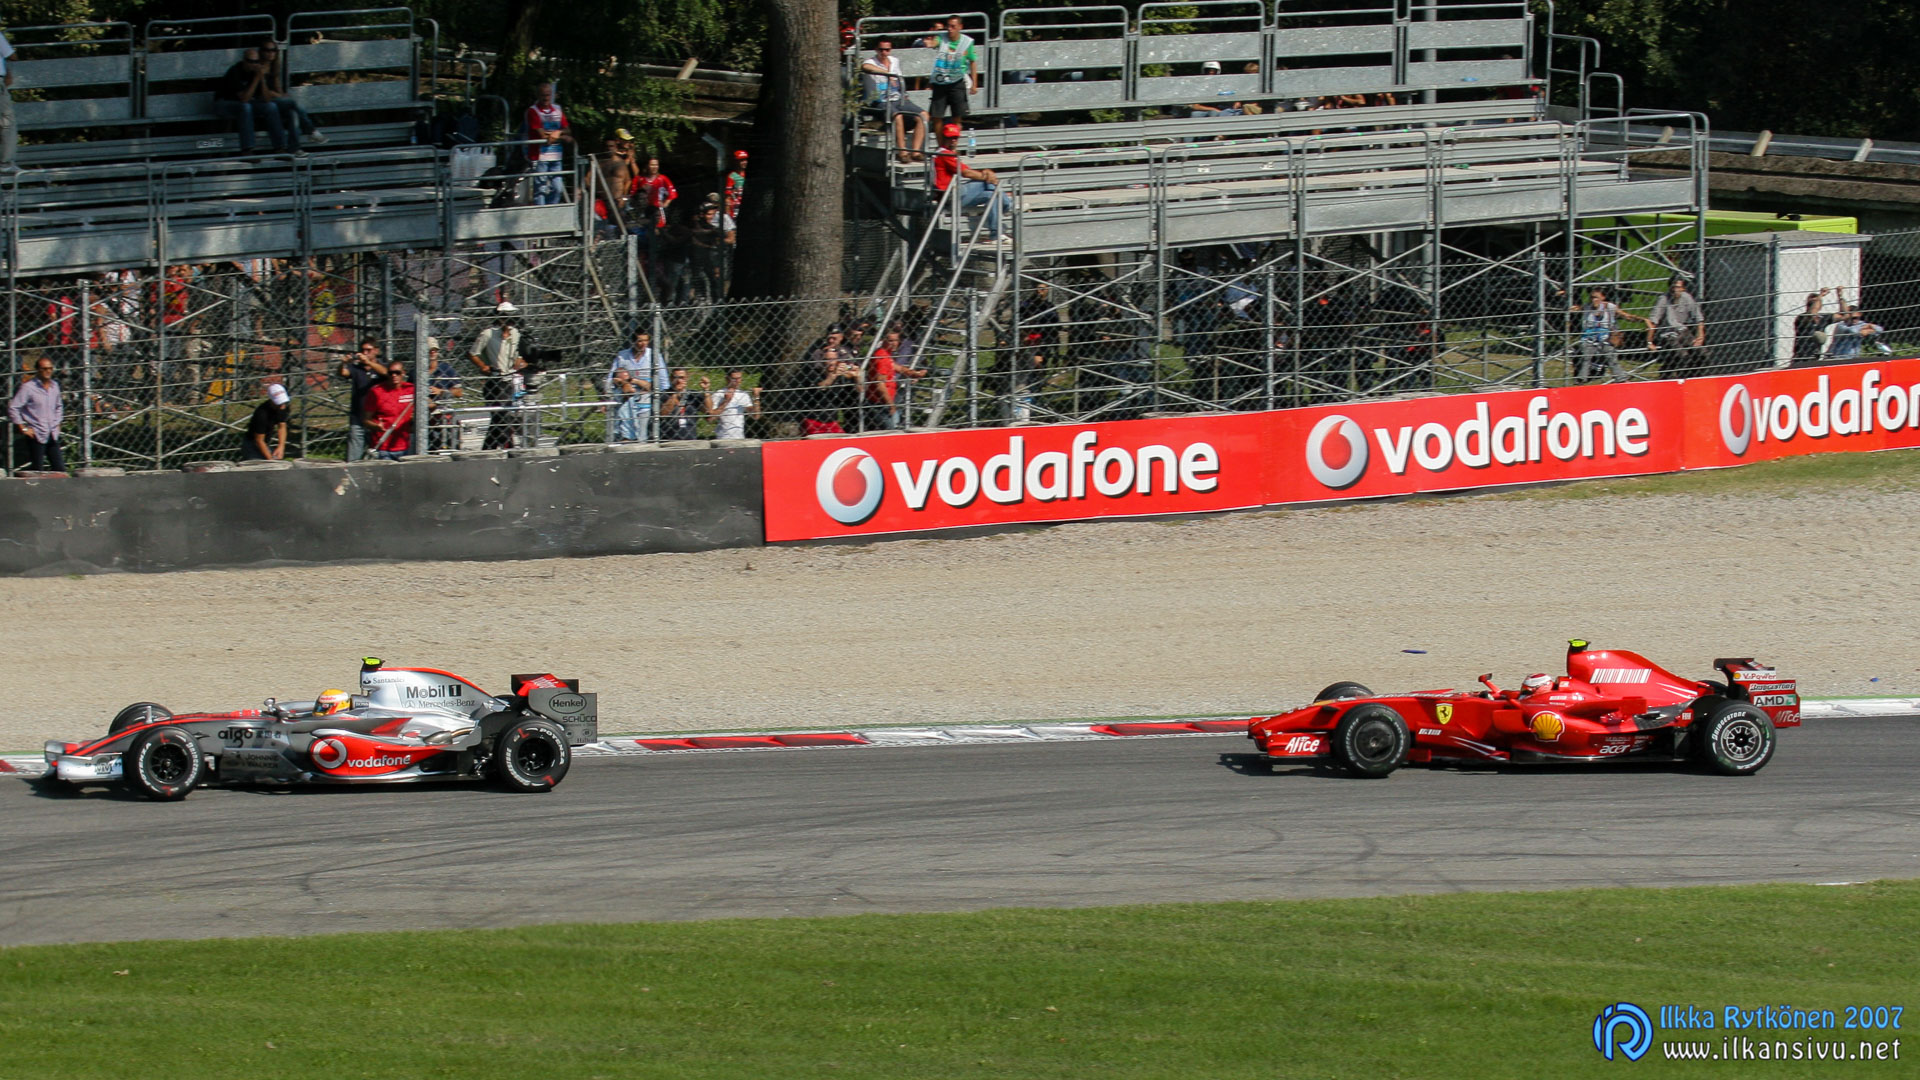 F1 kisa: Lewis Hamilton vs. Kimi Räikkönen